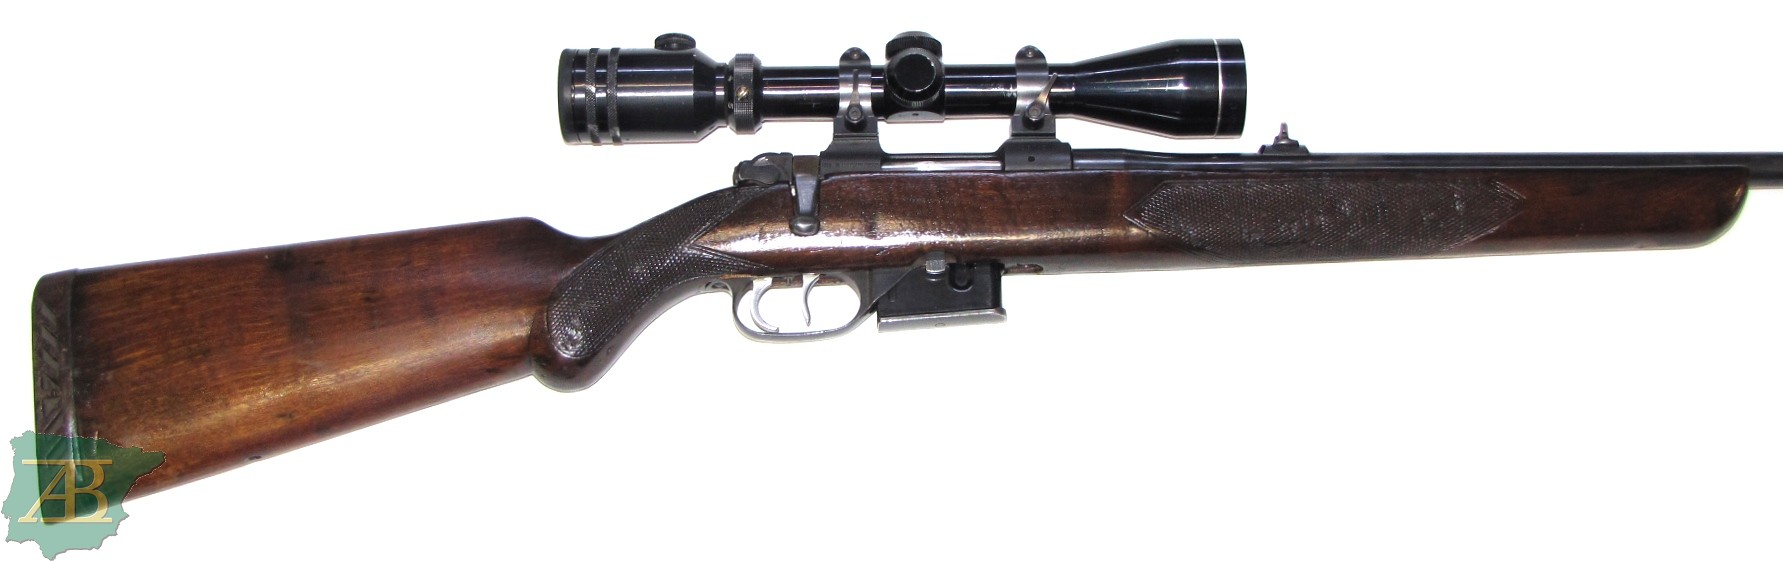 Rifle de cerrojo de caza BRNO FOX MODEL 2 Ref REP2024-160-armeriaiberica-2